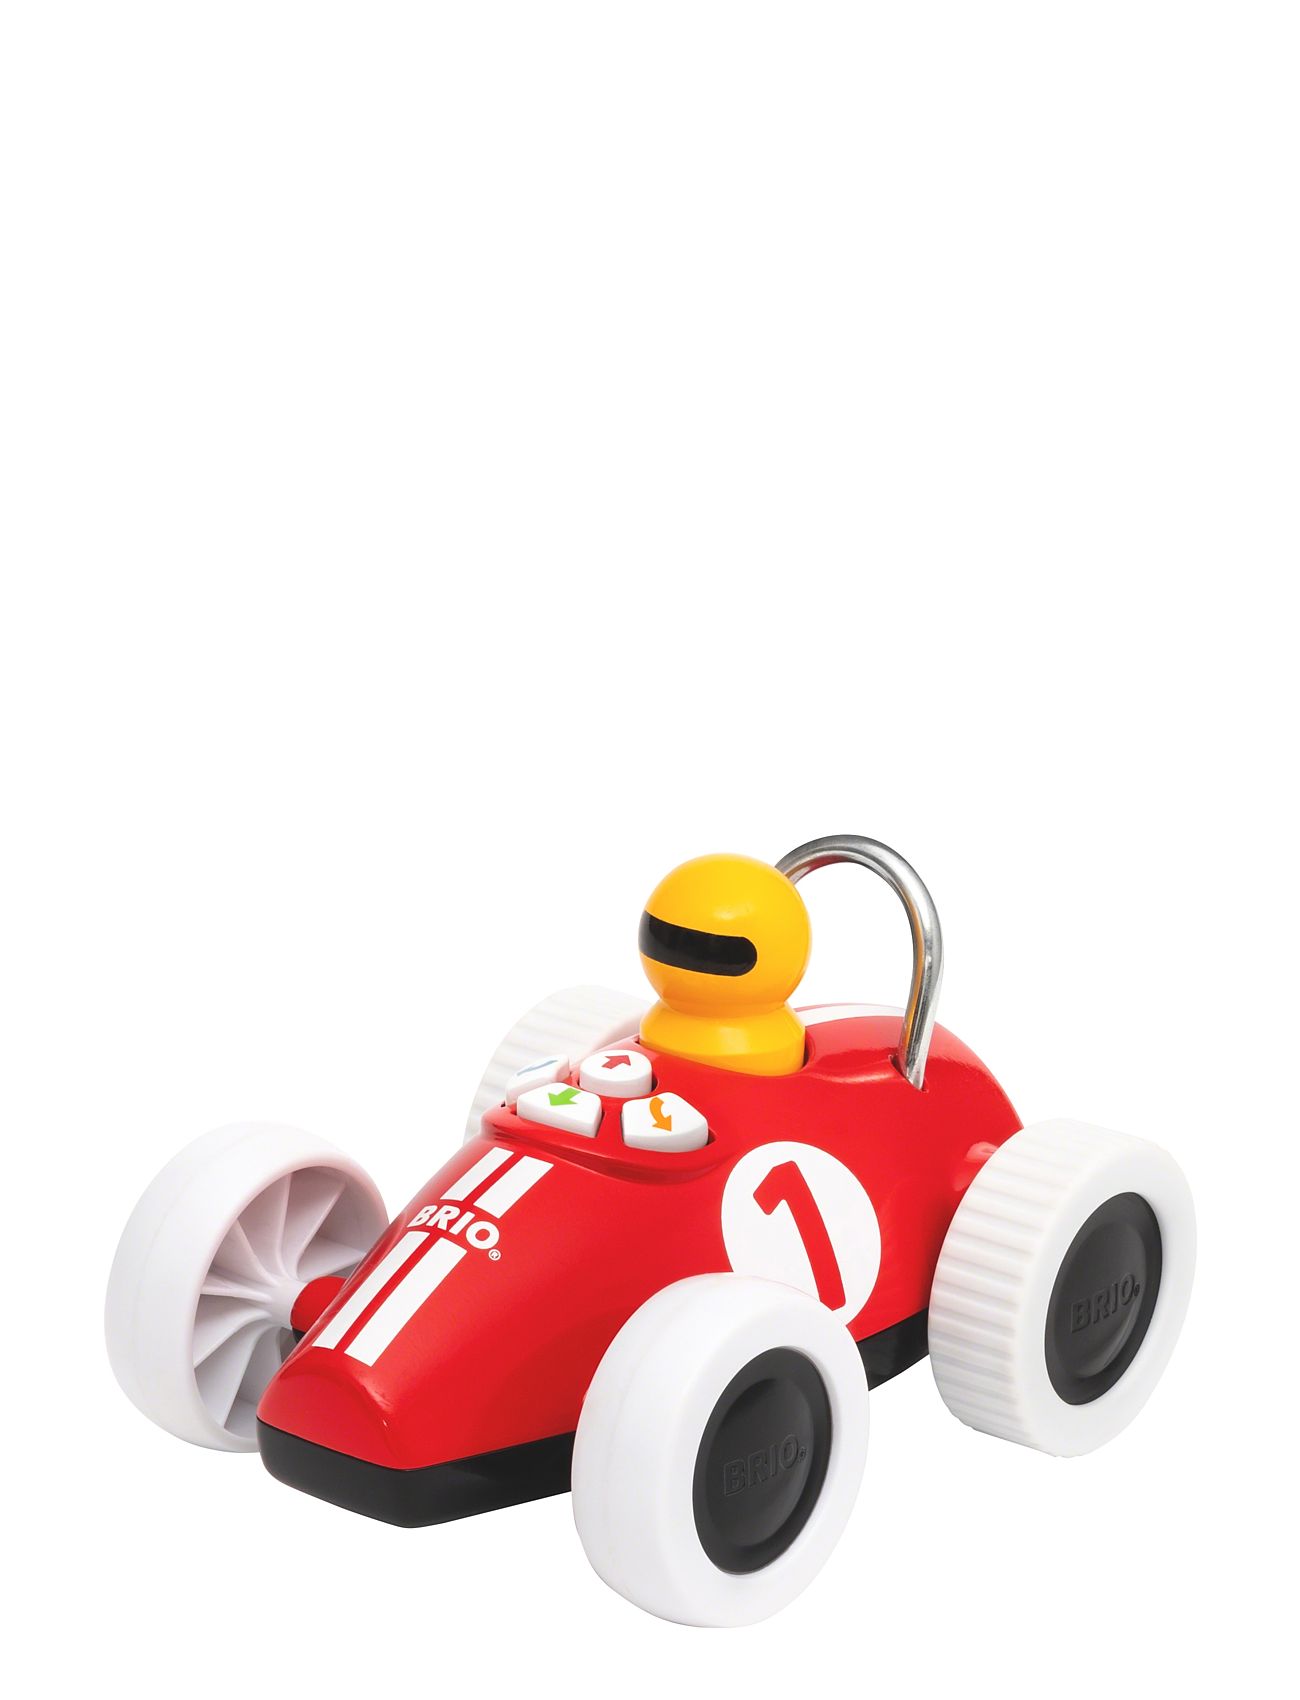 Brio 30234 Leg Og Lær Action Racerbil Toys Toy Cars & Vehicles Toy Cars Red BRIO